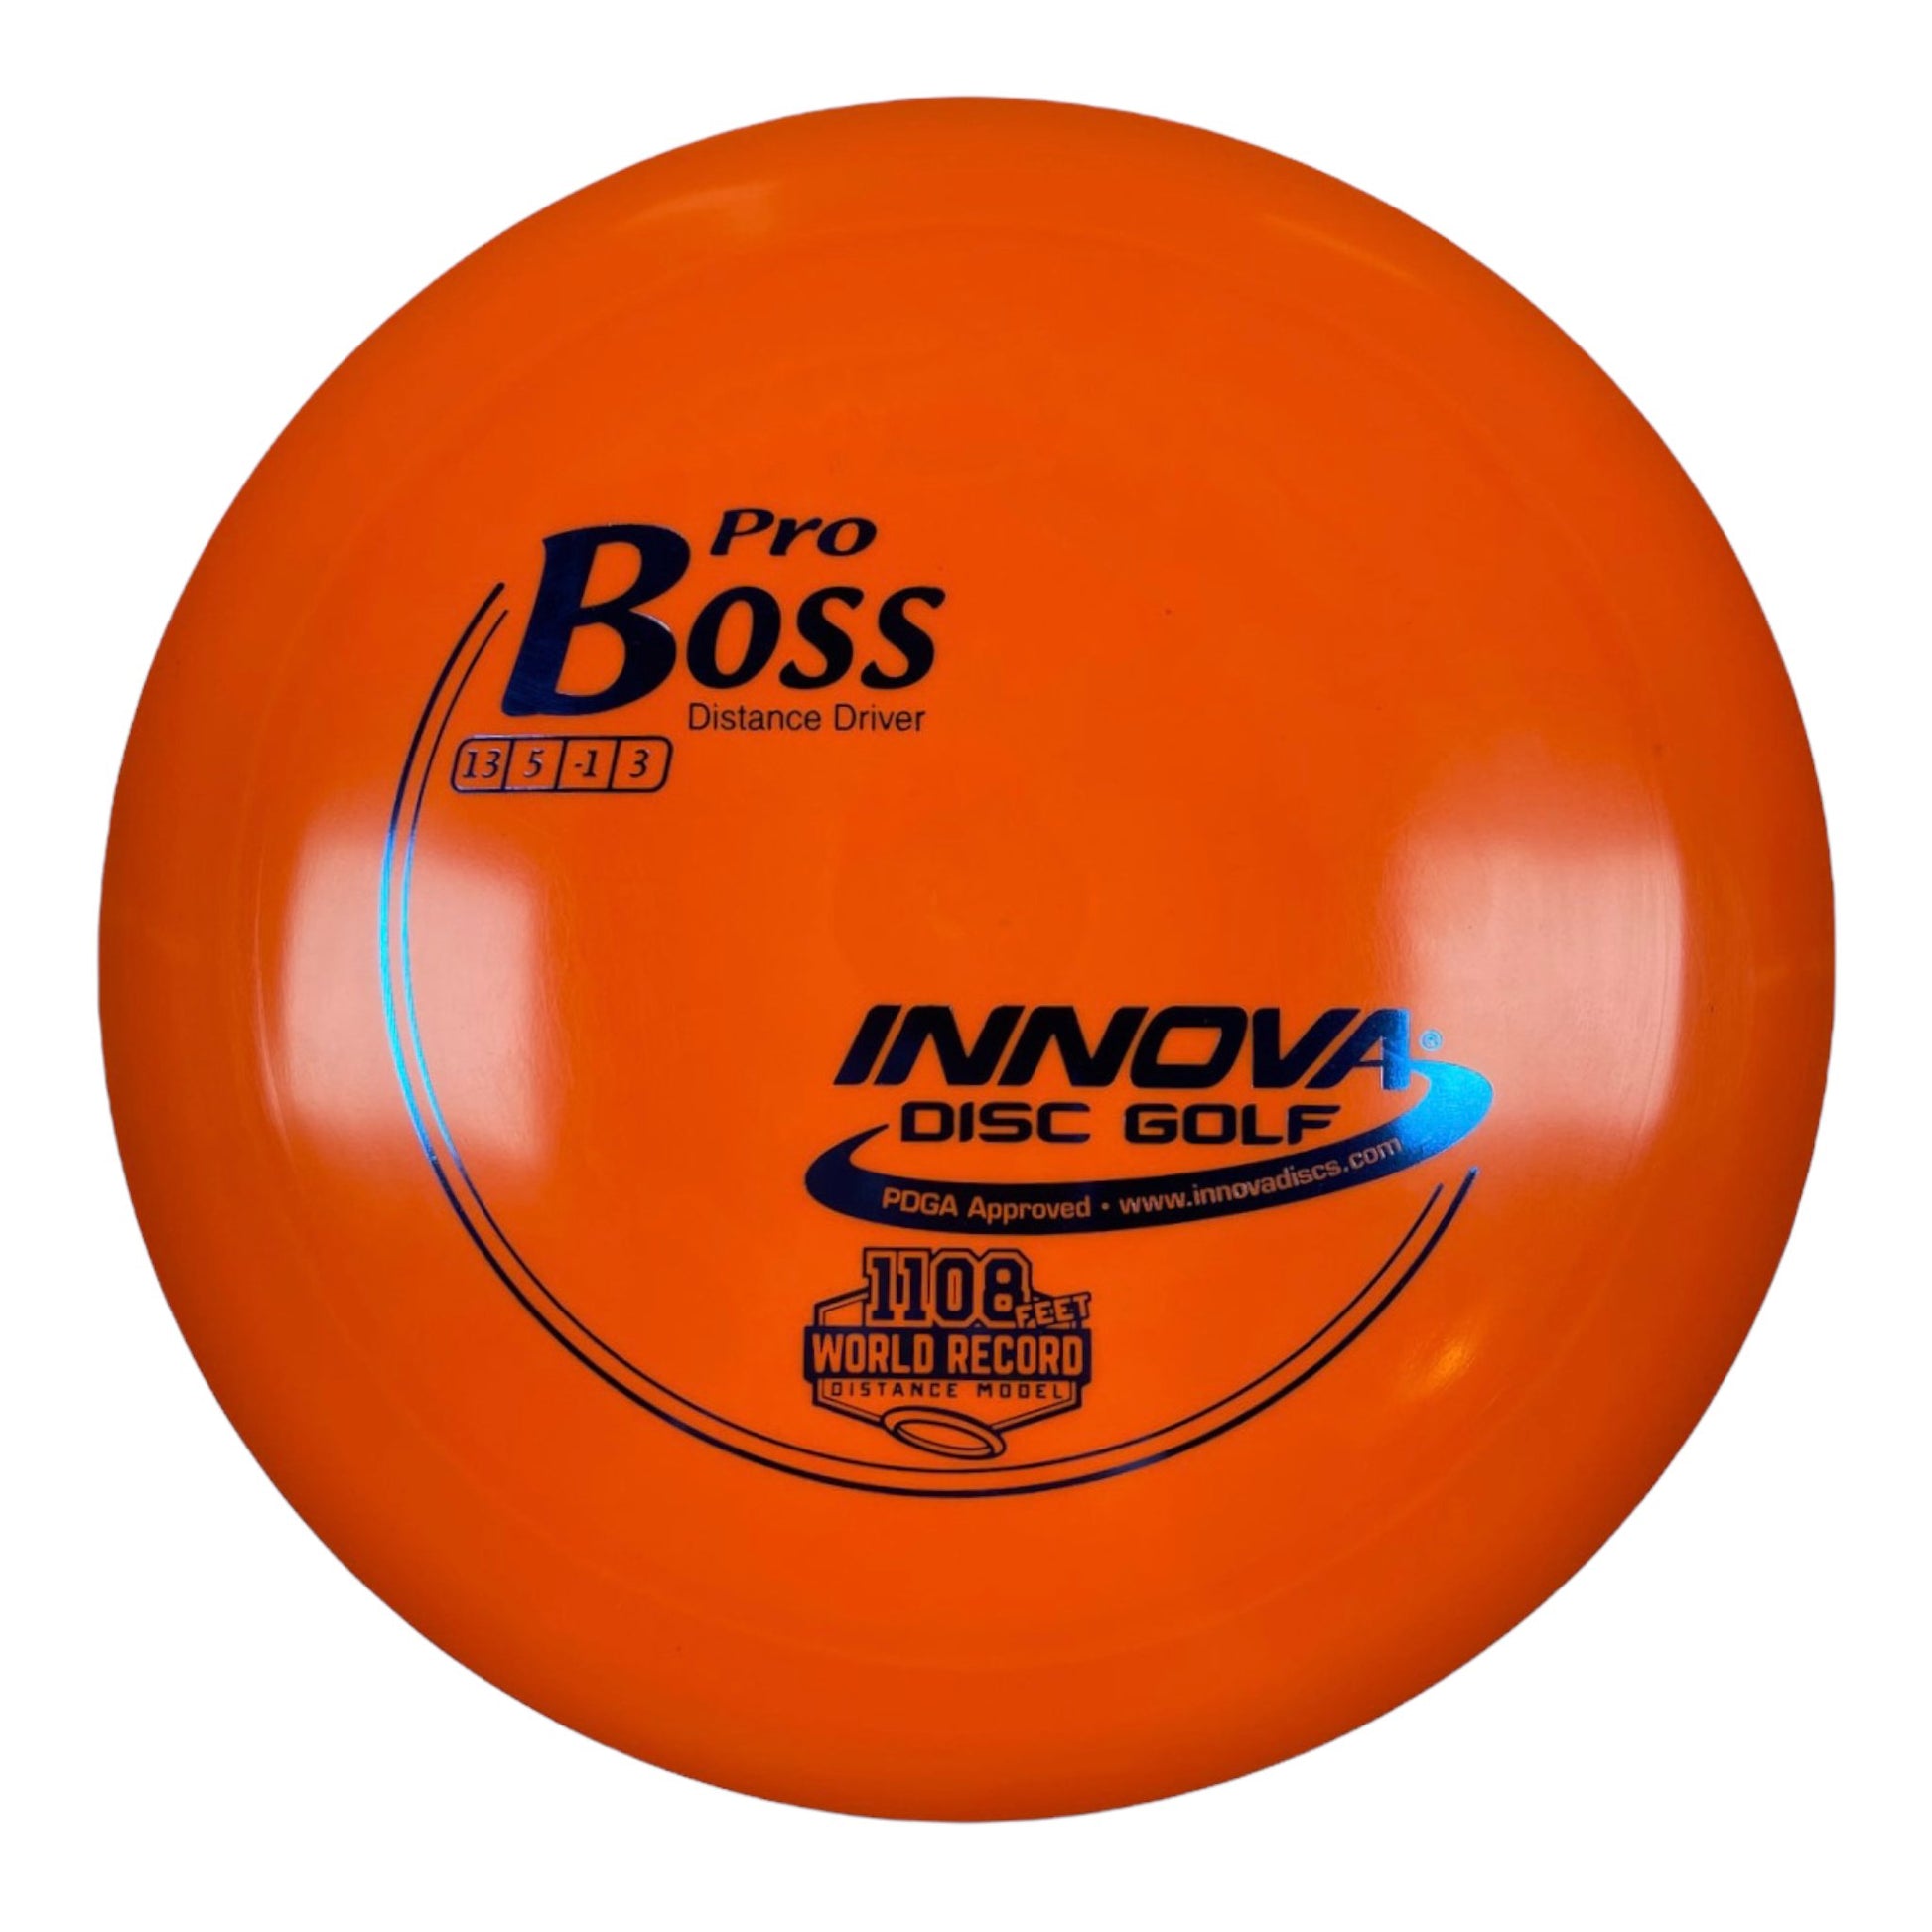 Innova Champion Discs Boss | Pro | Orange/Blue 175g Disc Golf